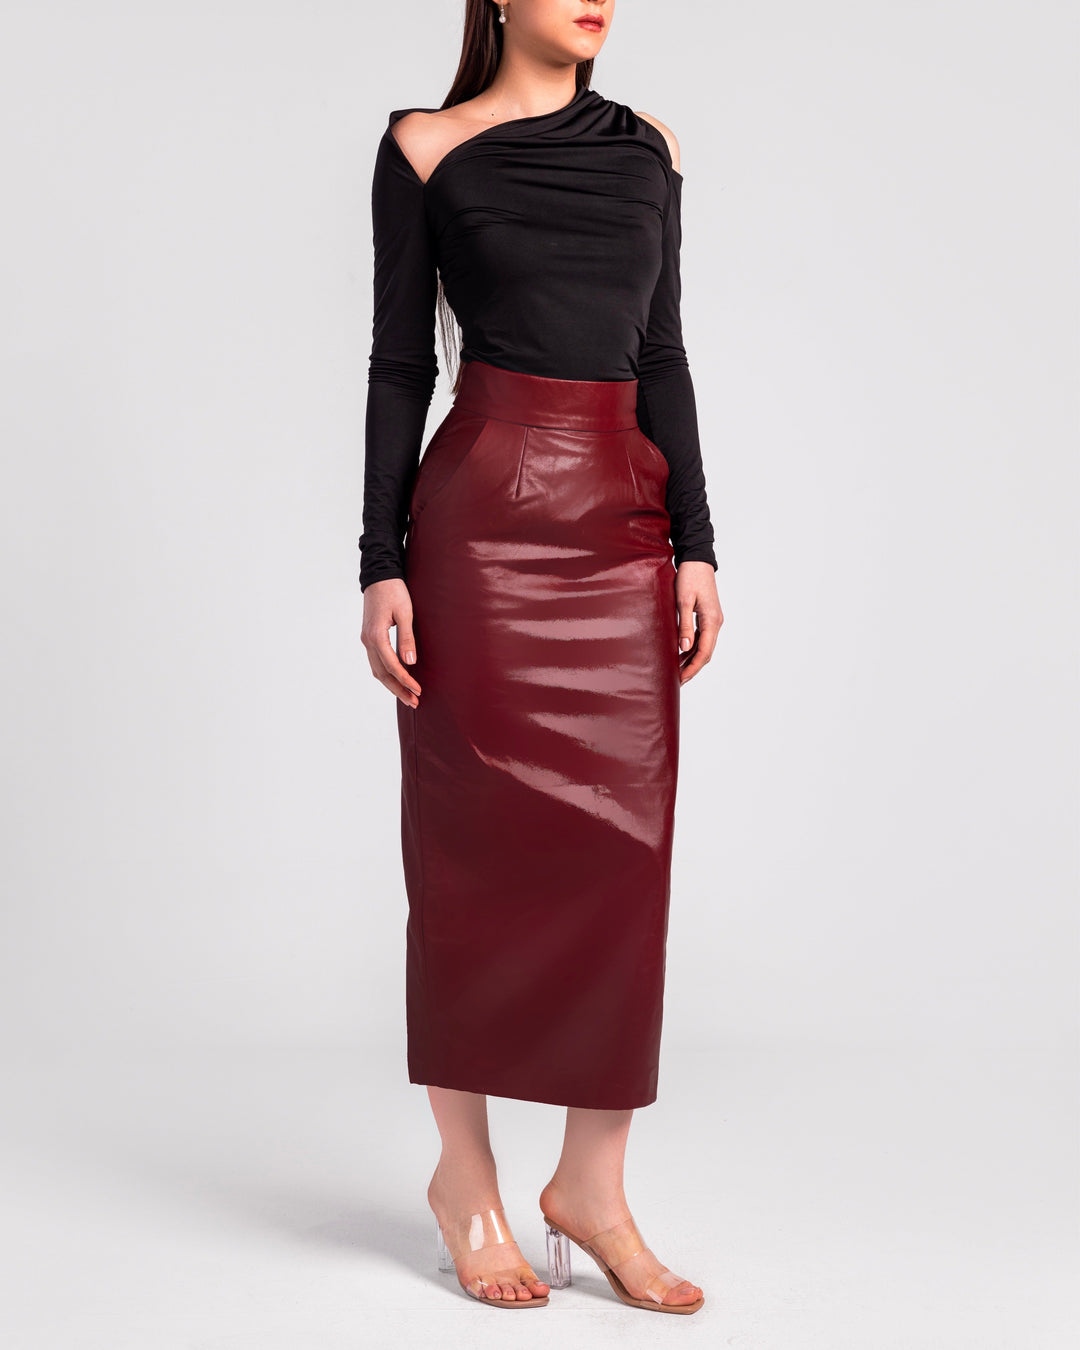 High-Waist Real Leather Pencil Skirt"